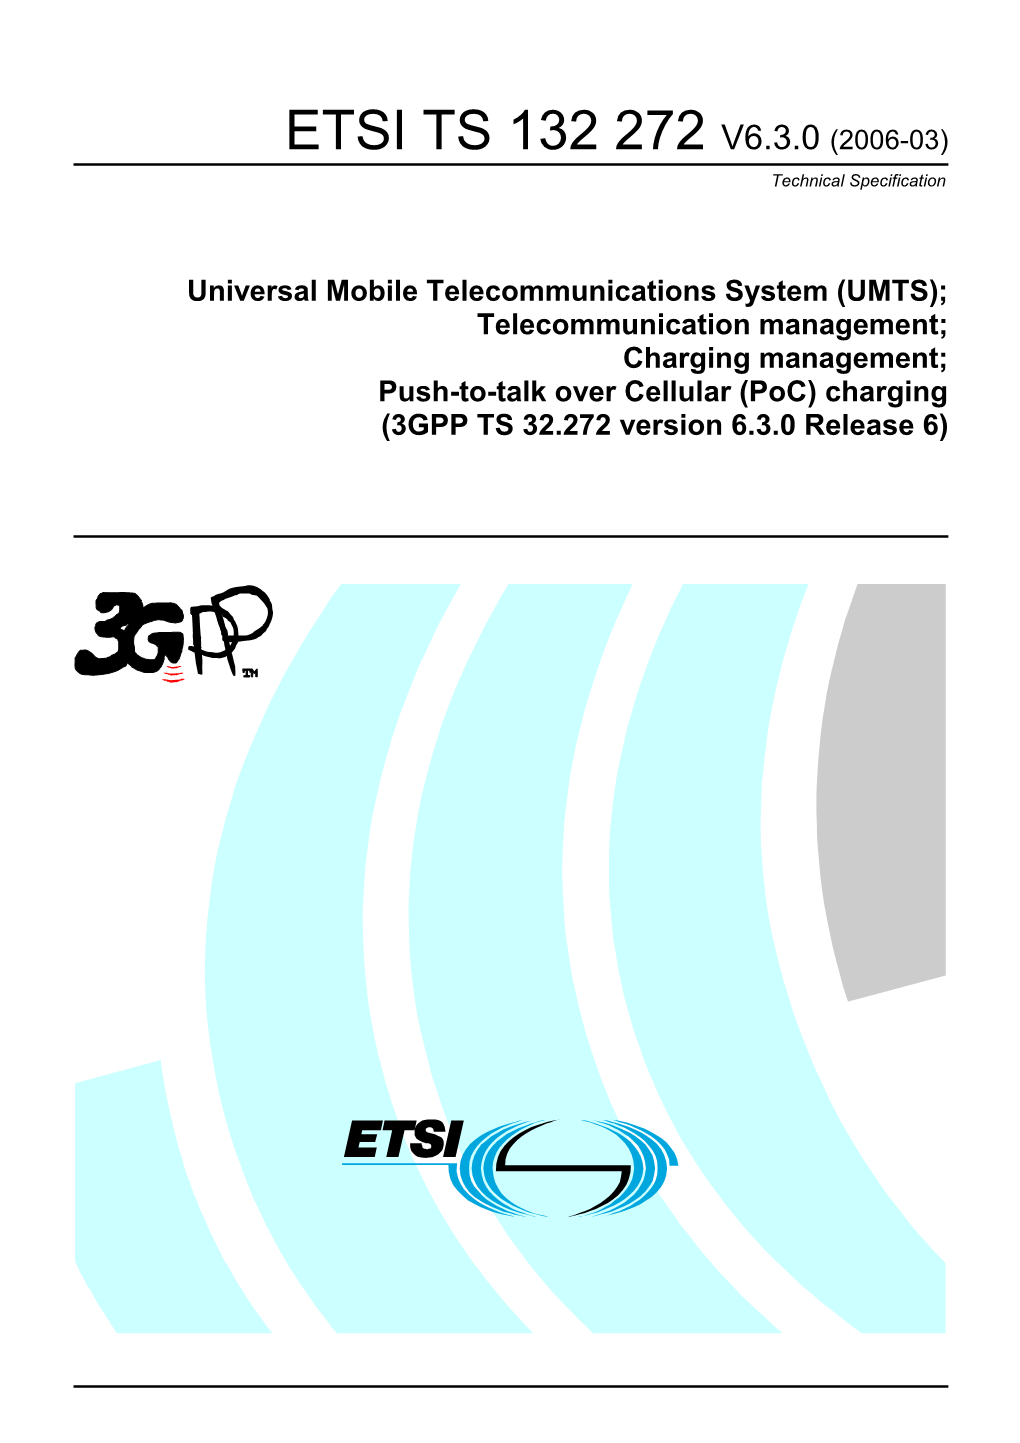 ETSI TS 132 272 V6.3.0 (2006-03) Technical Specification